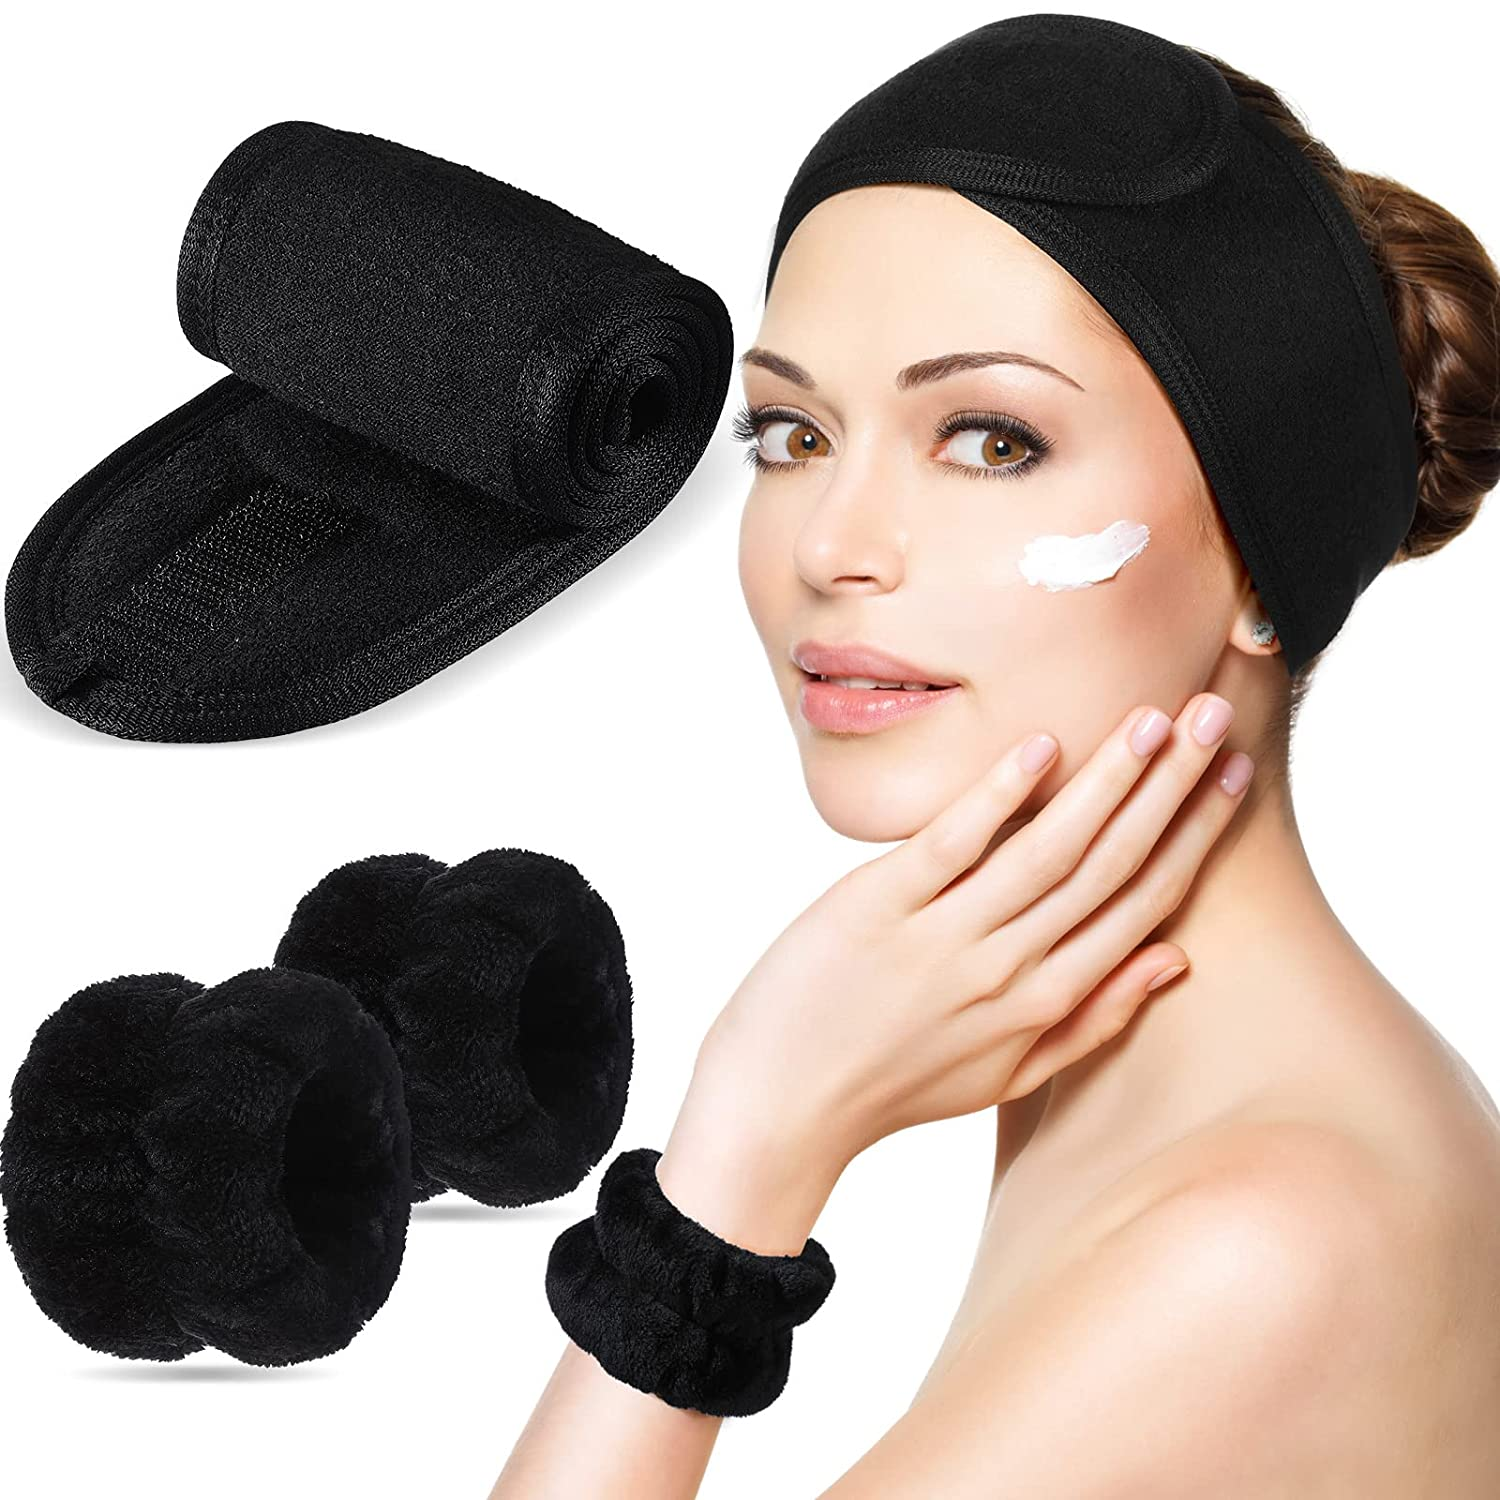 Spa Headband and Wristband  Adjustable Face Wash Hairband  for Girls